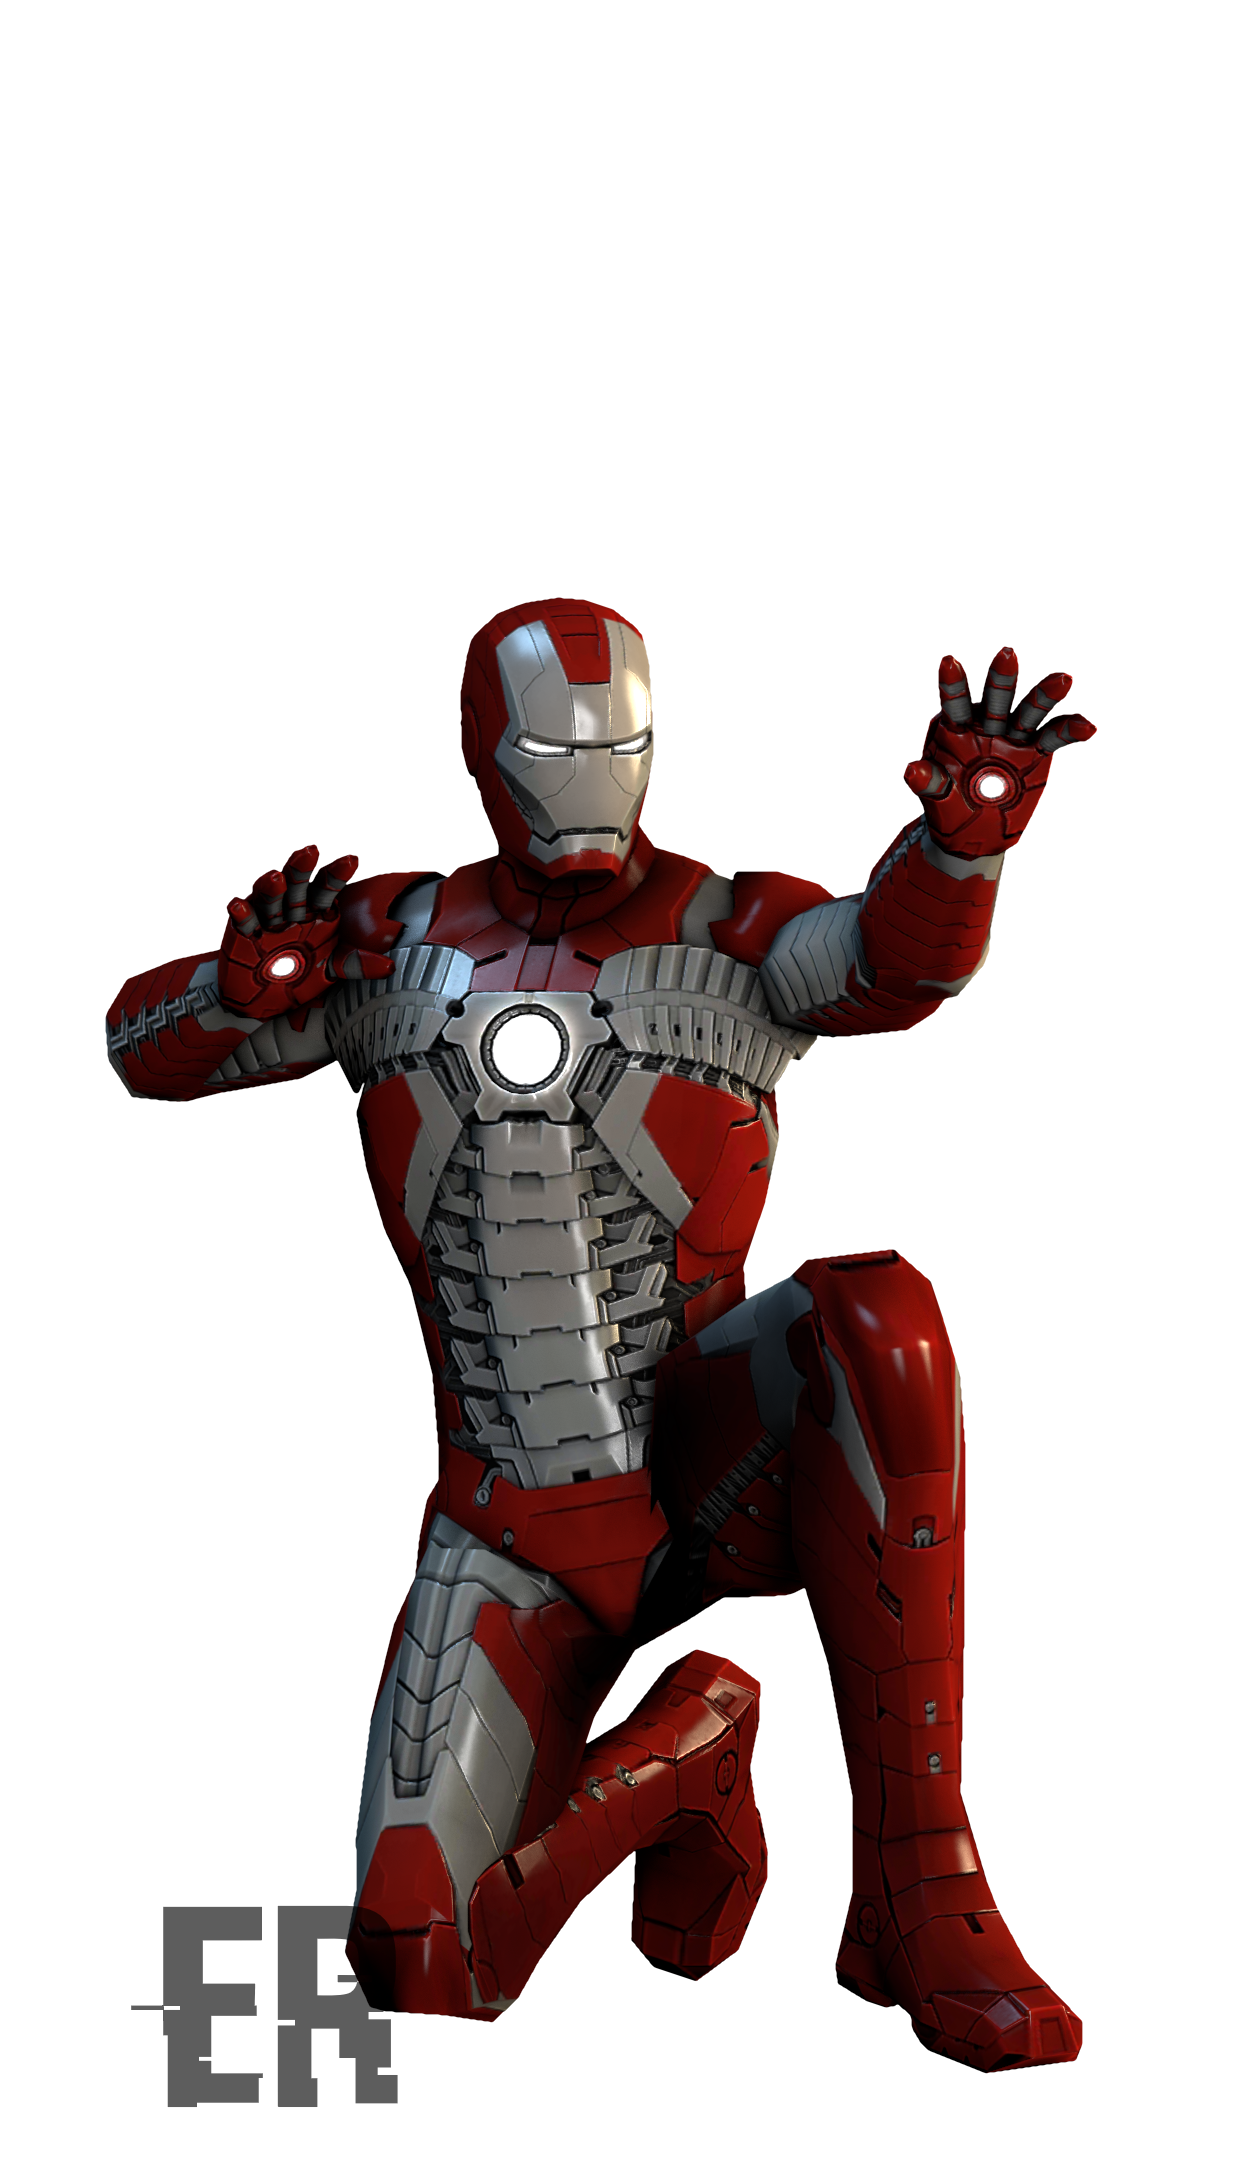 Marvel SFM] Iron Man Mark V by EliteRobo on DeviantArt